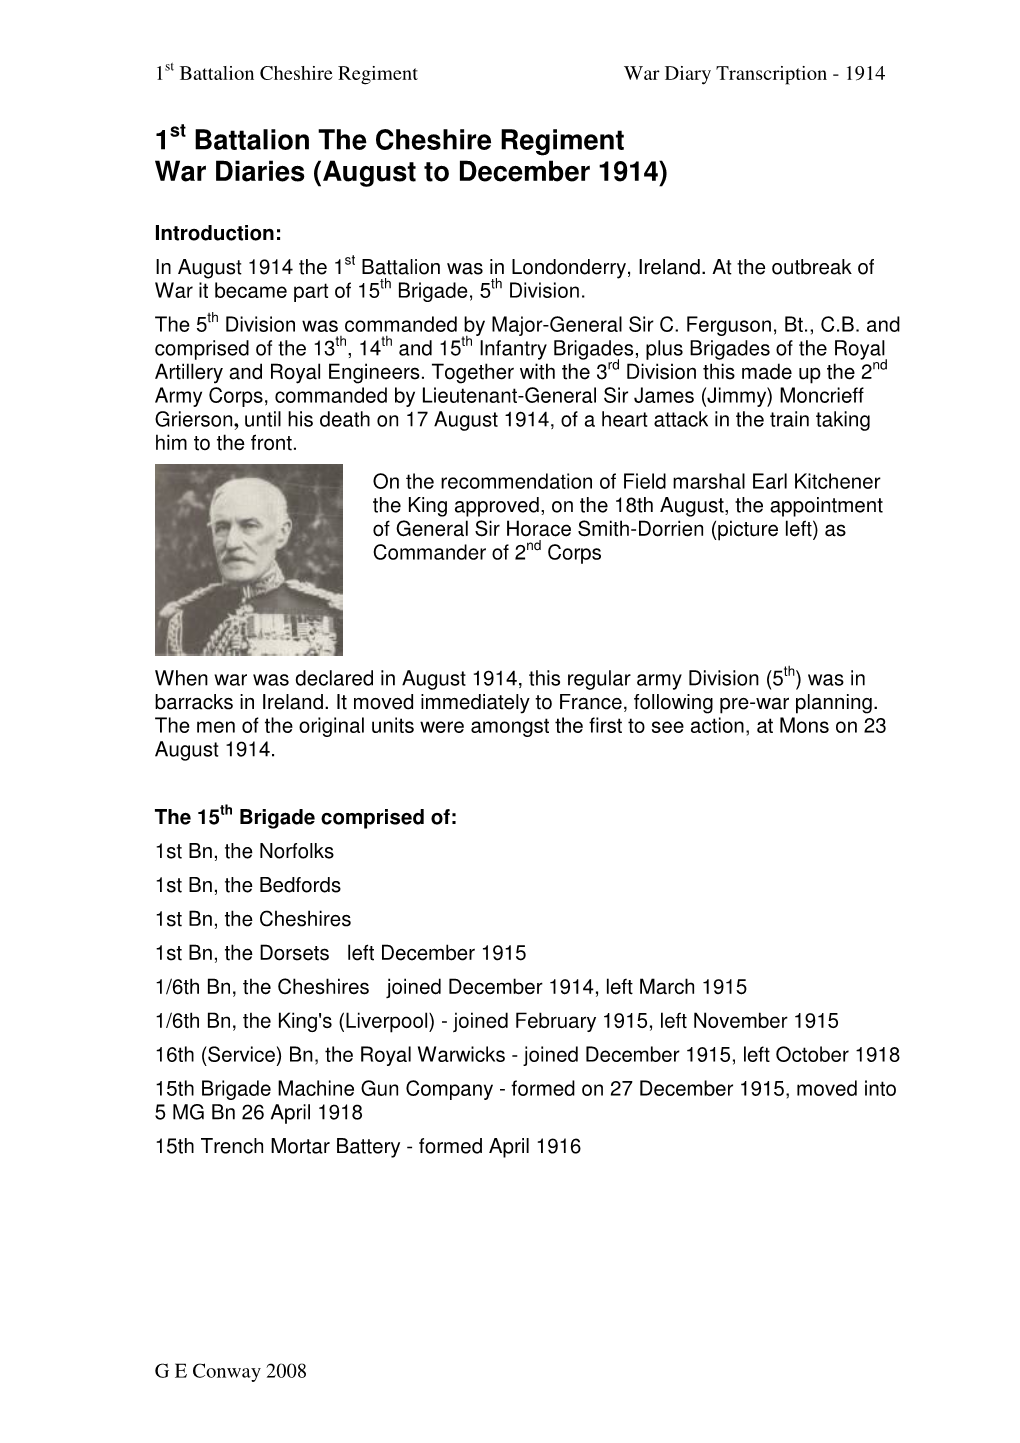 1St Battalion the Cheshire Regiment War Diaries (August to December 1914)